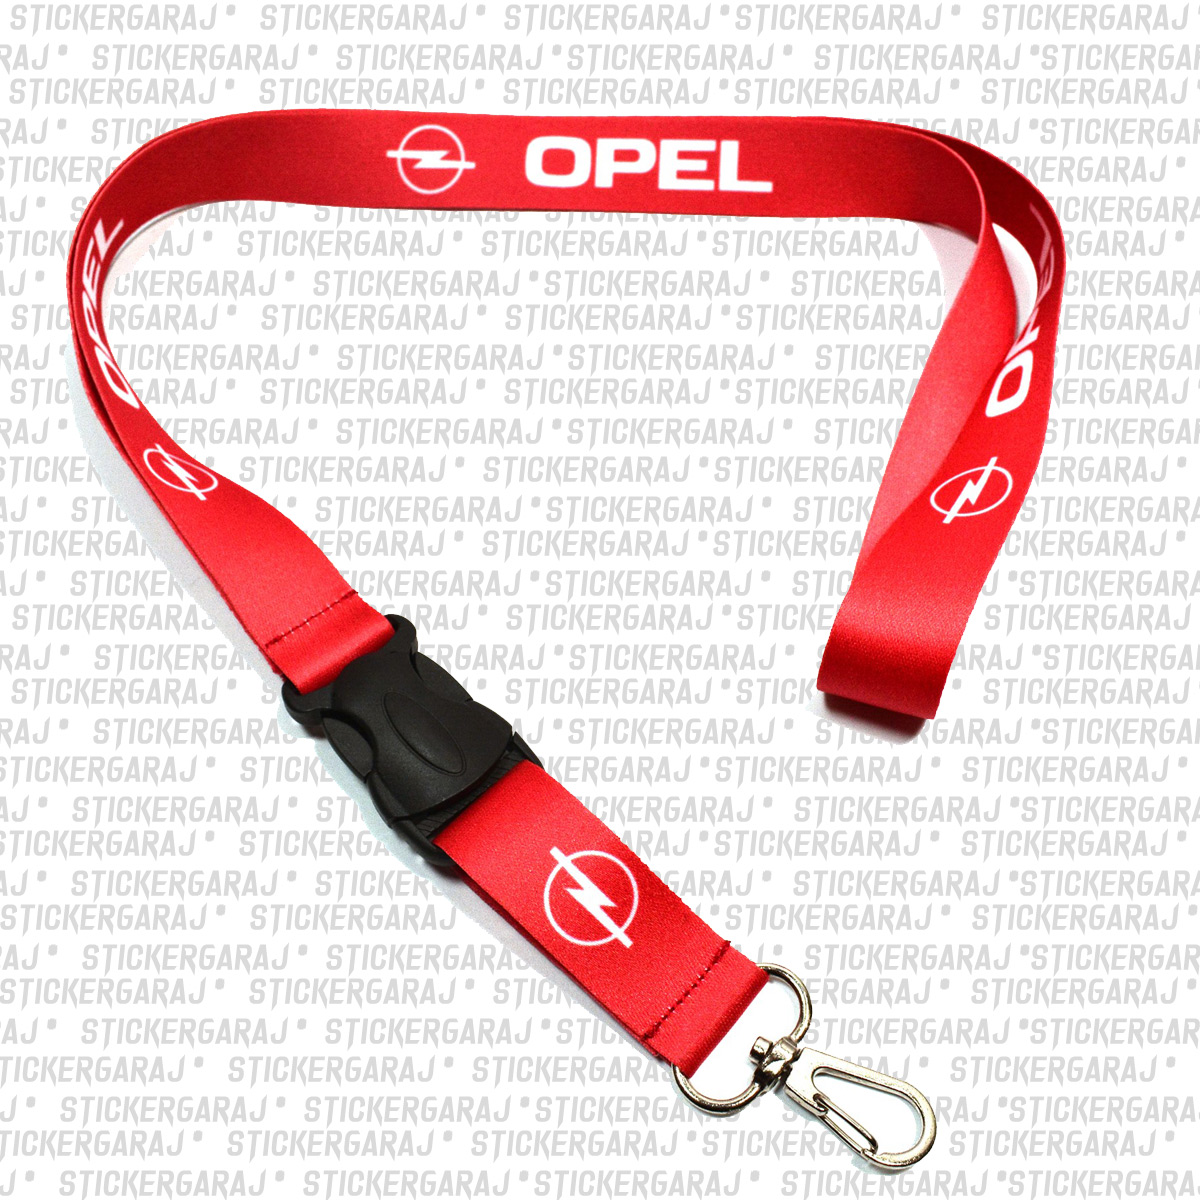 opel anahtarlik - Opel ayna boyun ipi - Baskılı